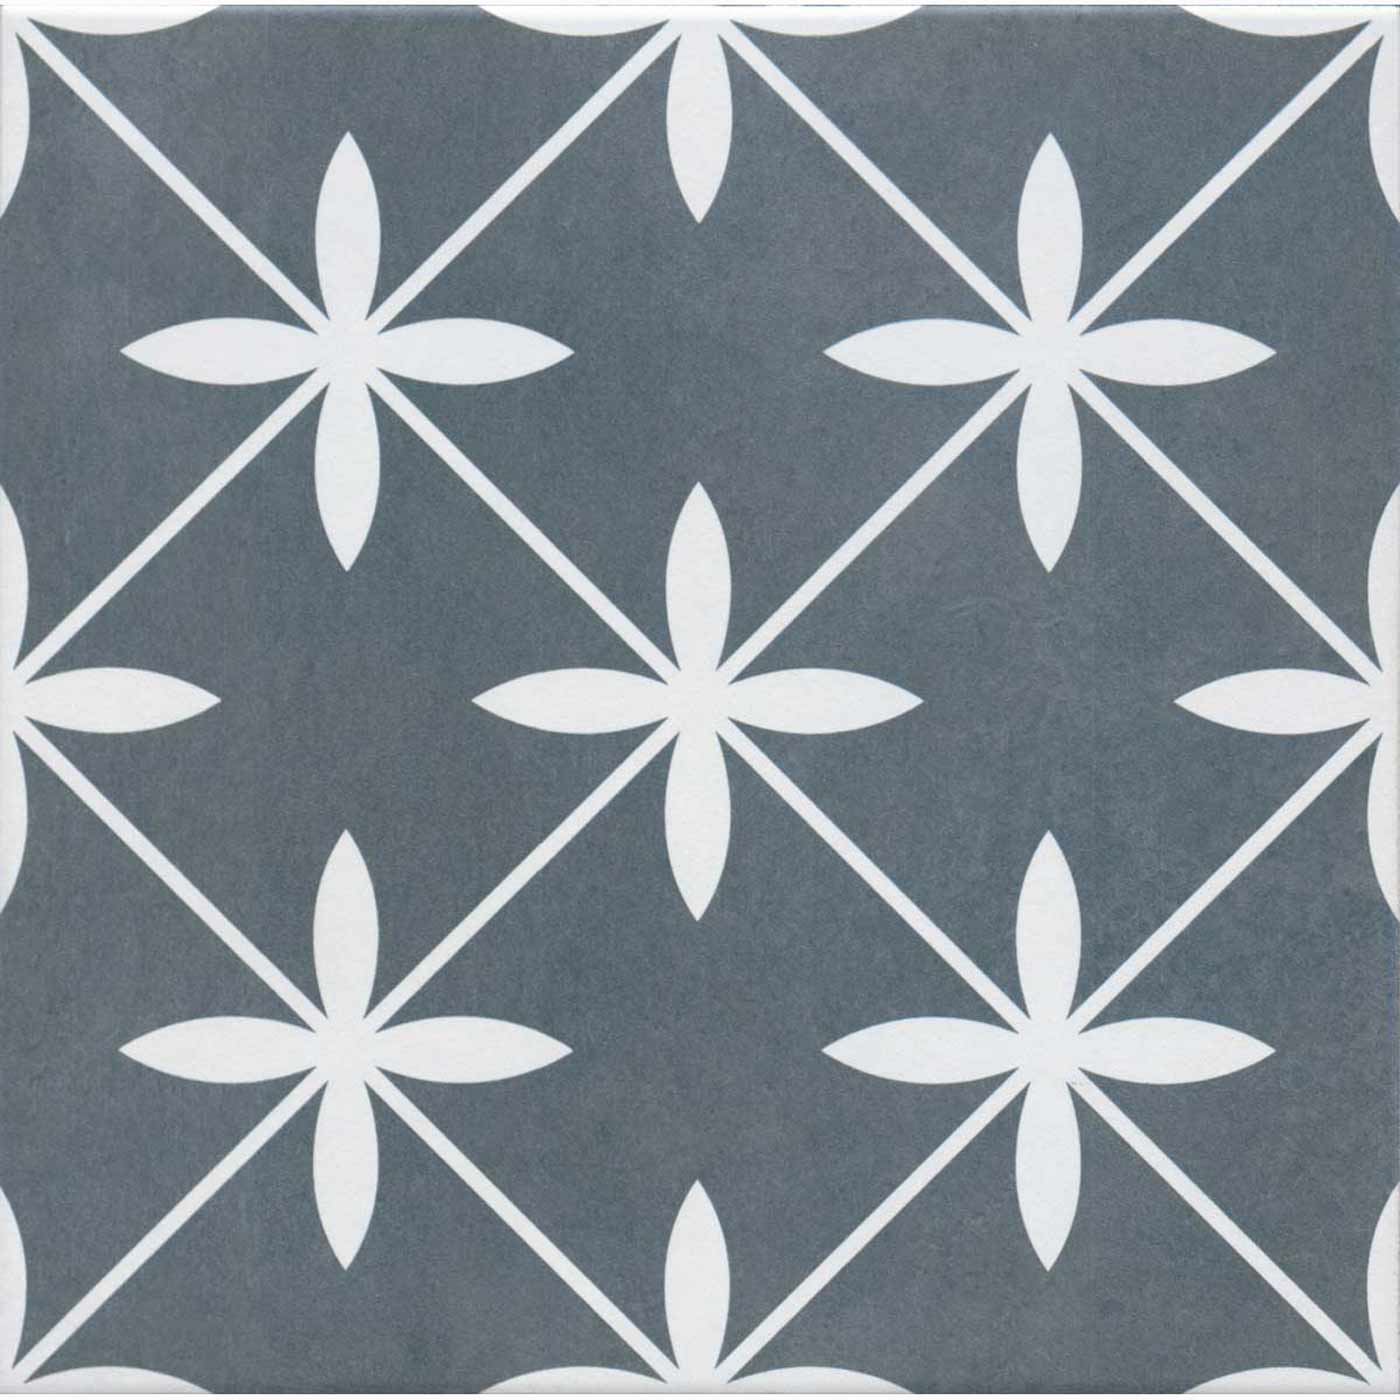 Wicker Charcoal Grey Patterned Floor Tile 33x33cm Ceramic Planet